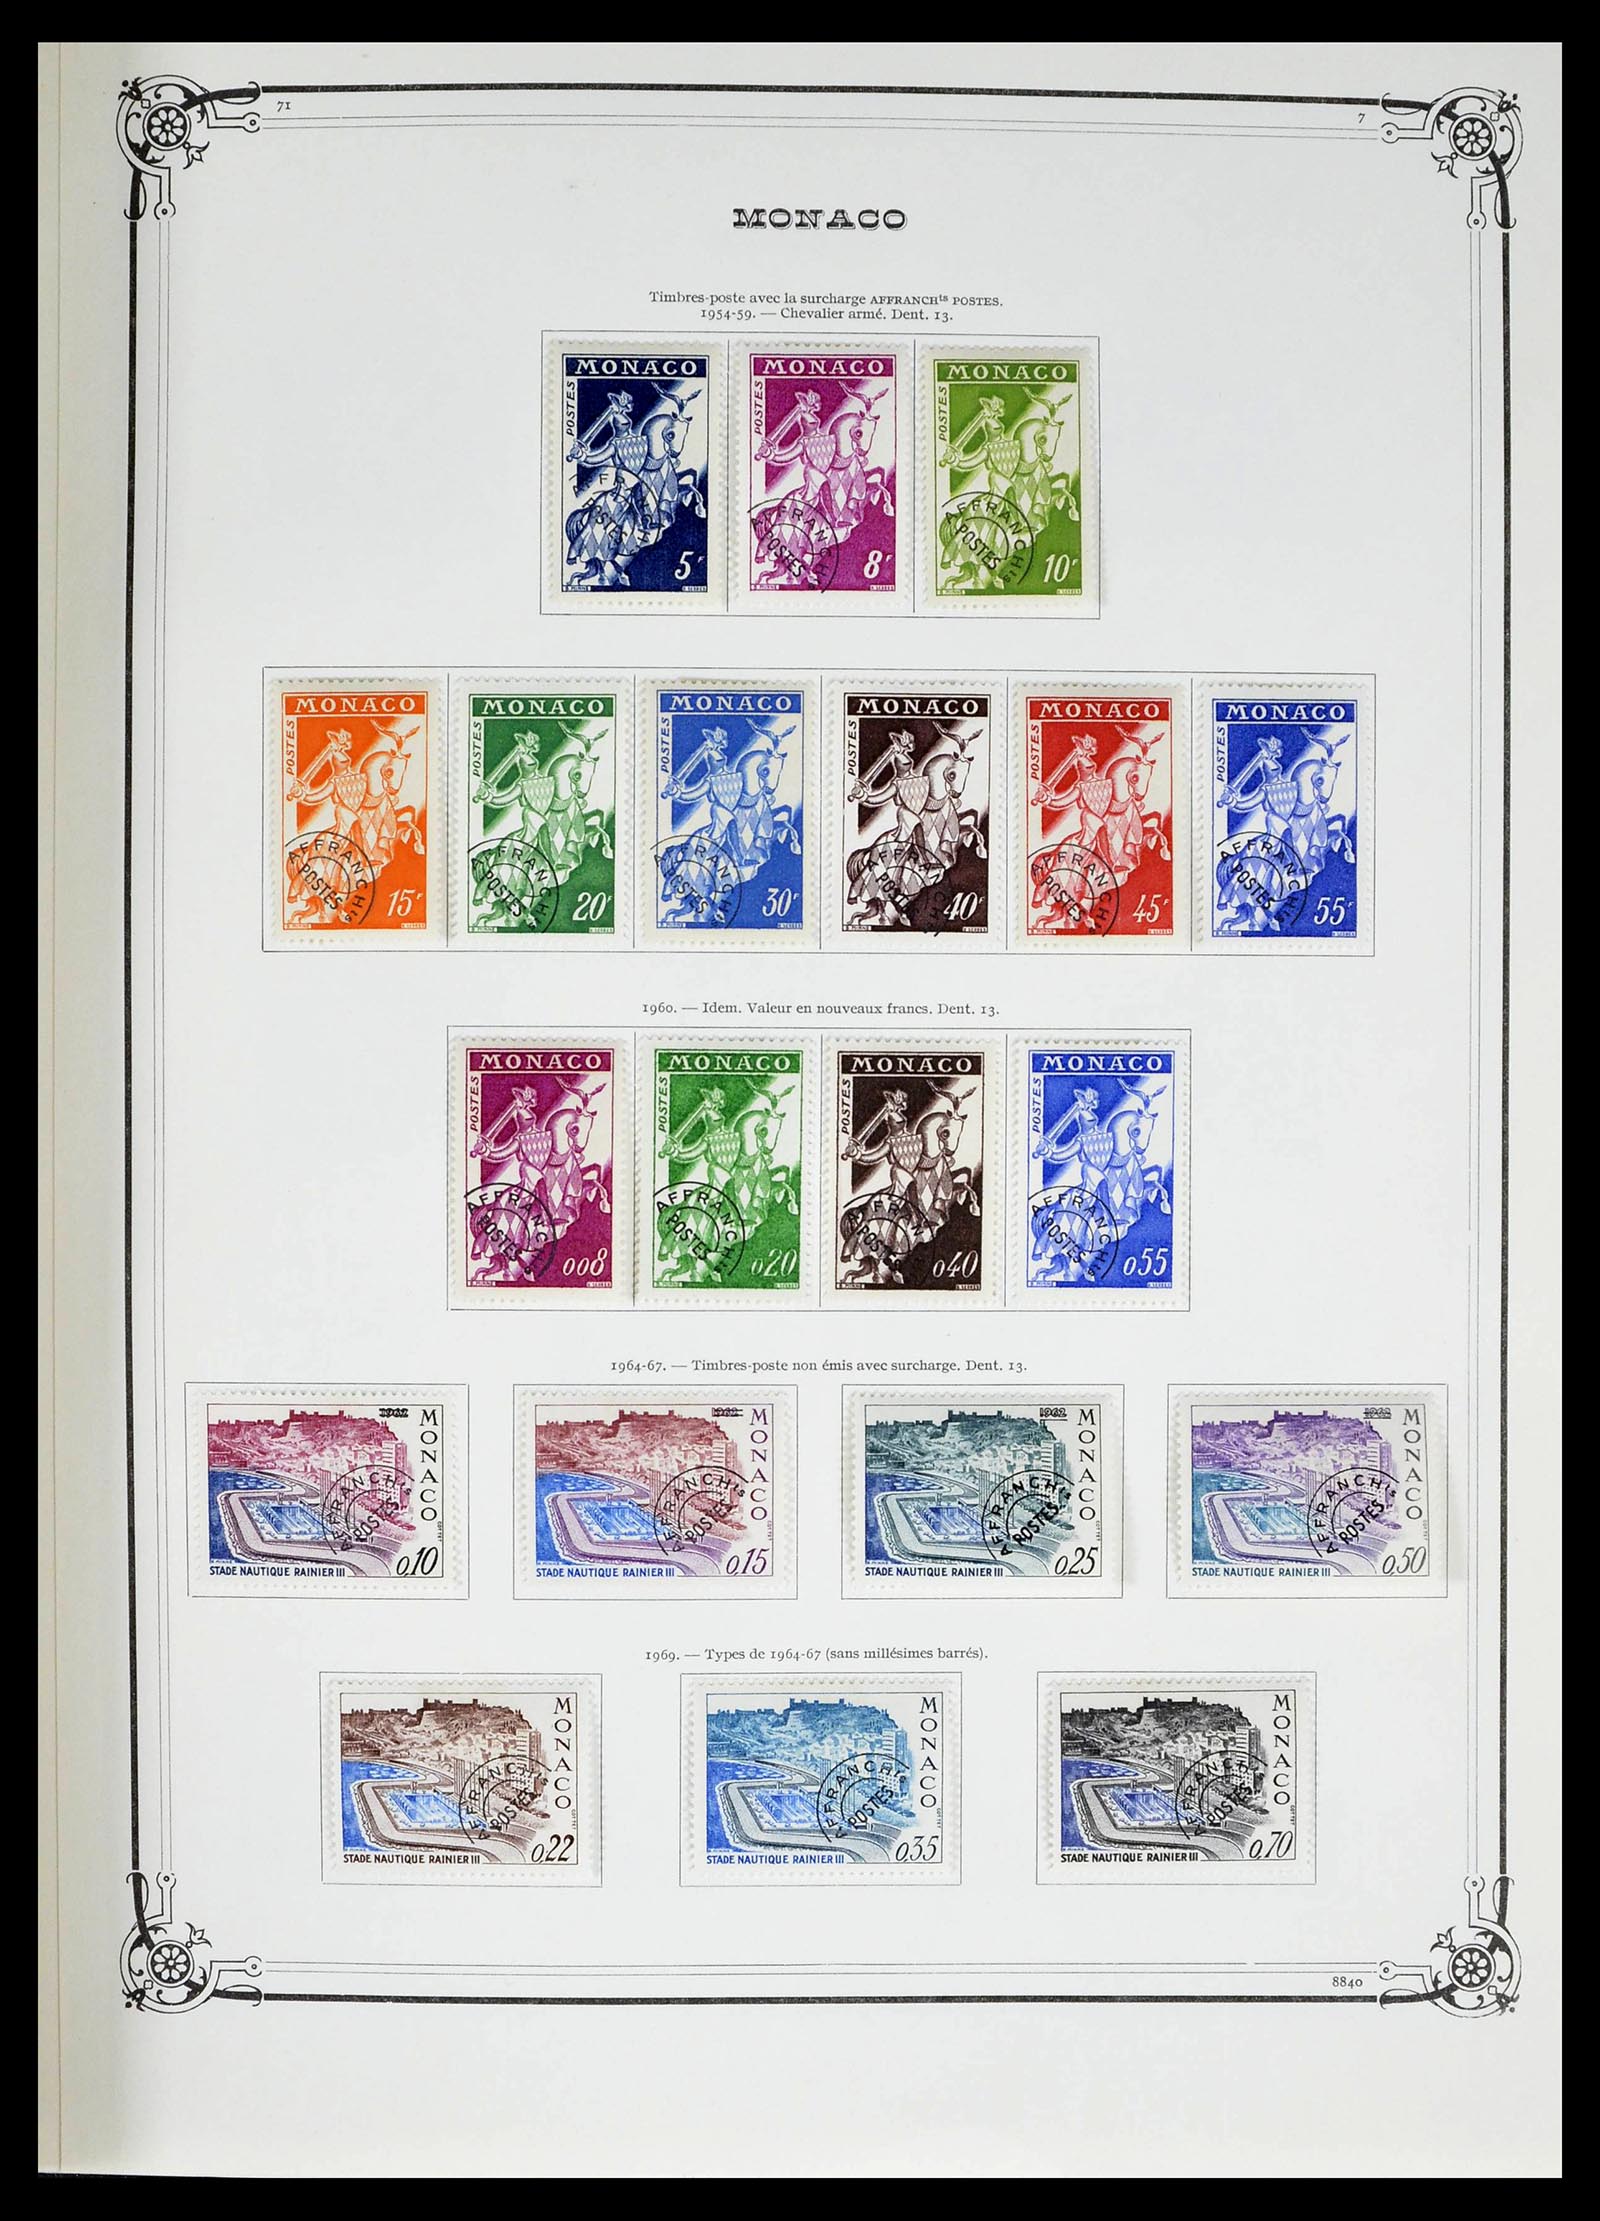 39133 0074 - Stamp collection 39133 Monaco 1885-1996.